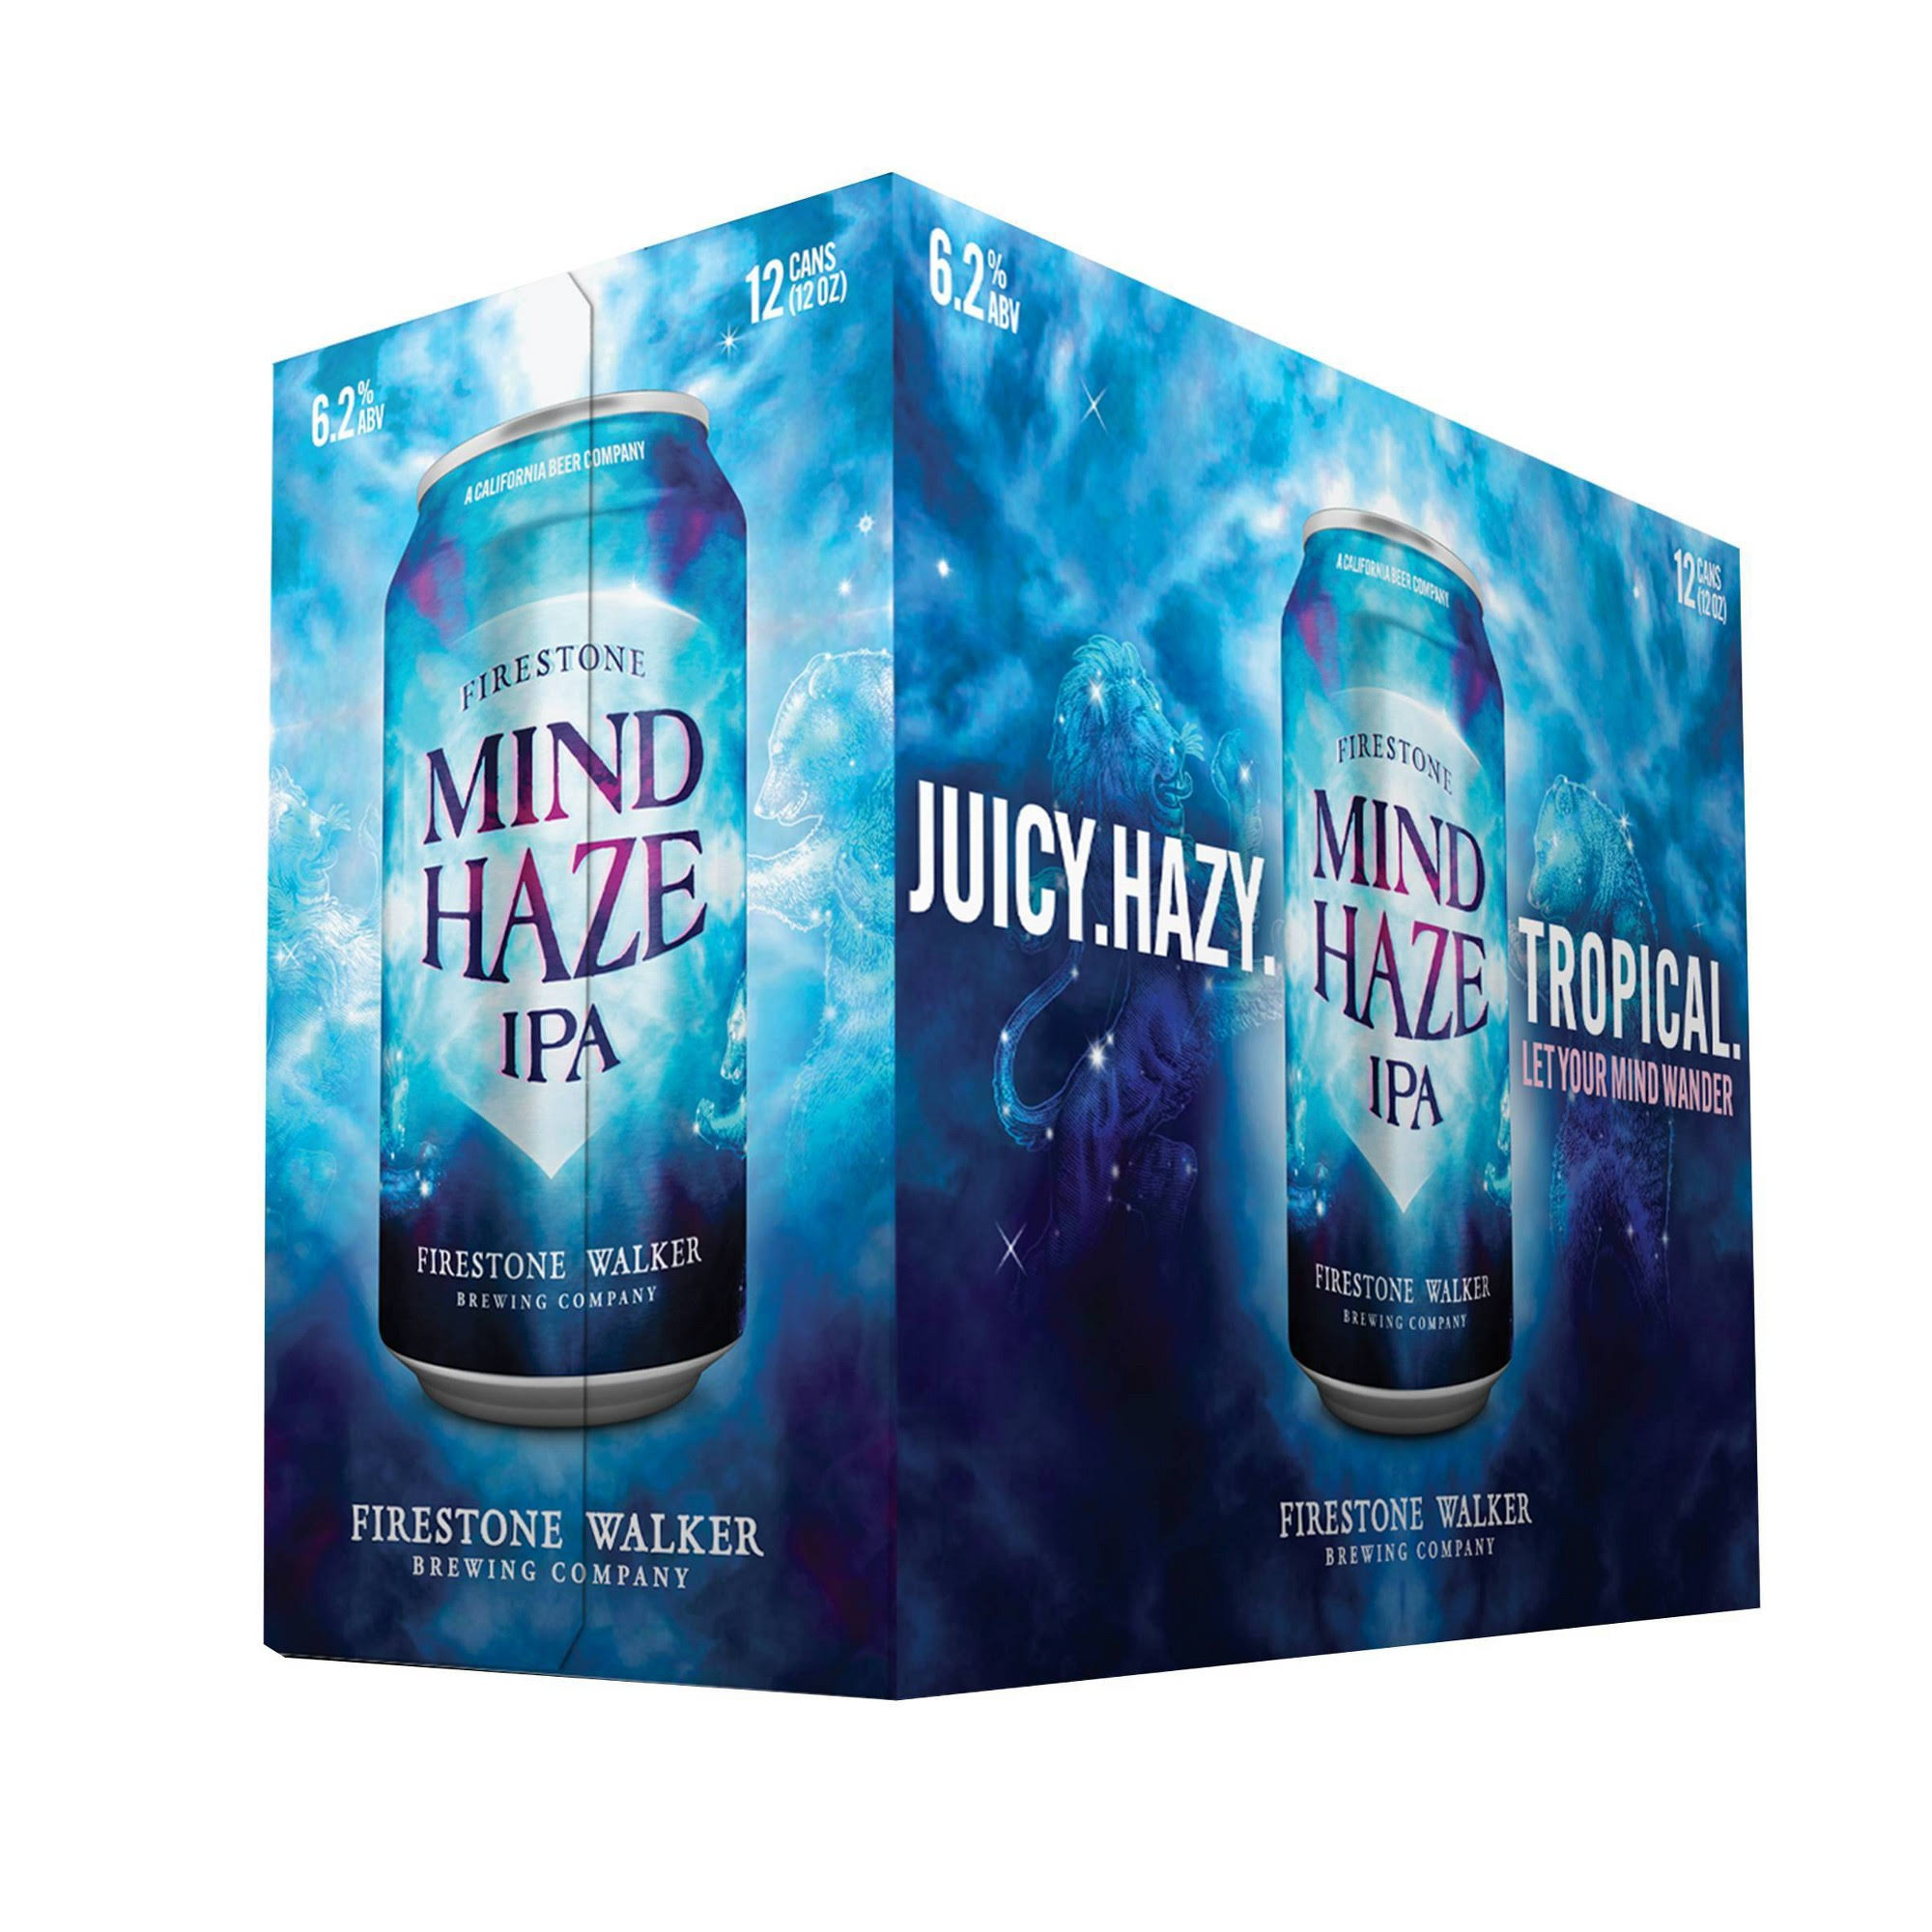 Firestone Walker Beer, IPA, Mind Haze - 12 pack, 12 oz cans